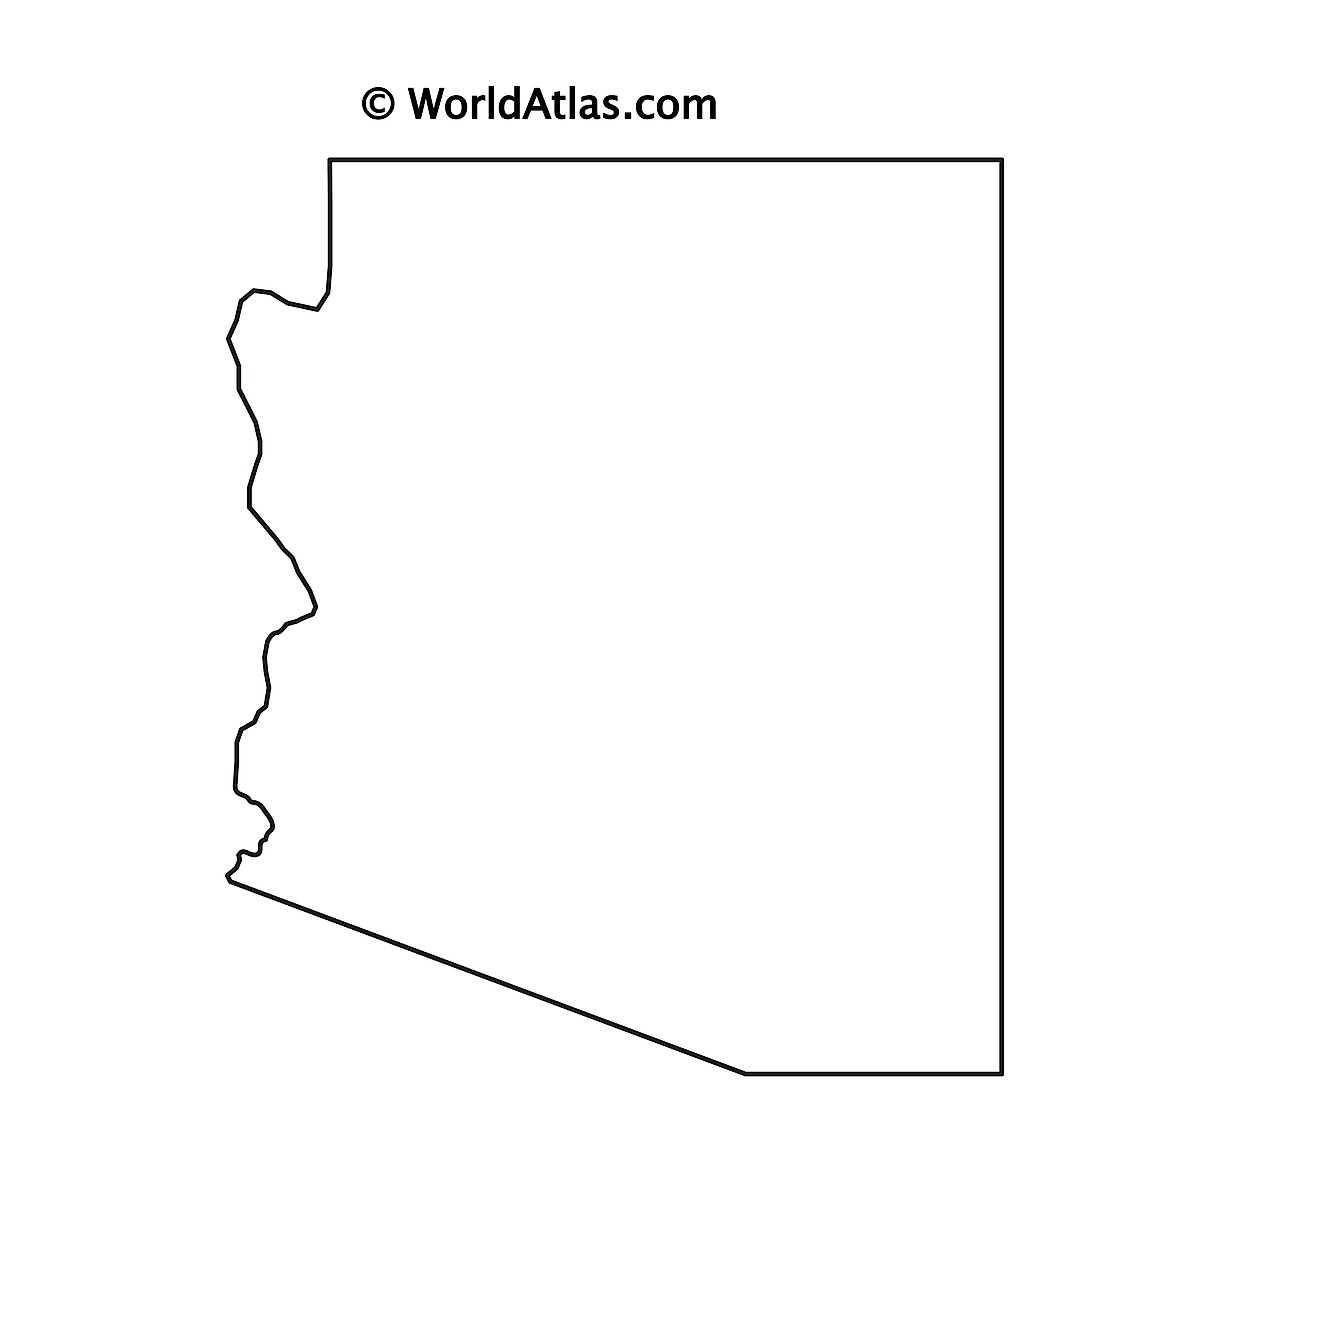 Blank Outline Map of Arizona